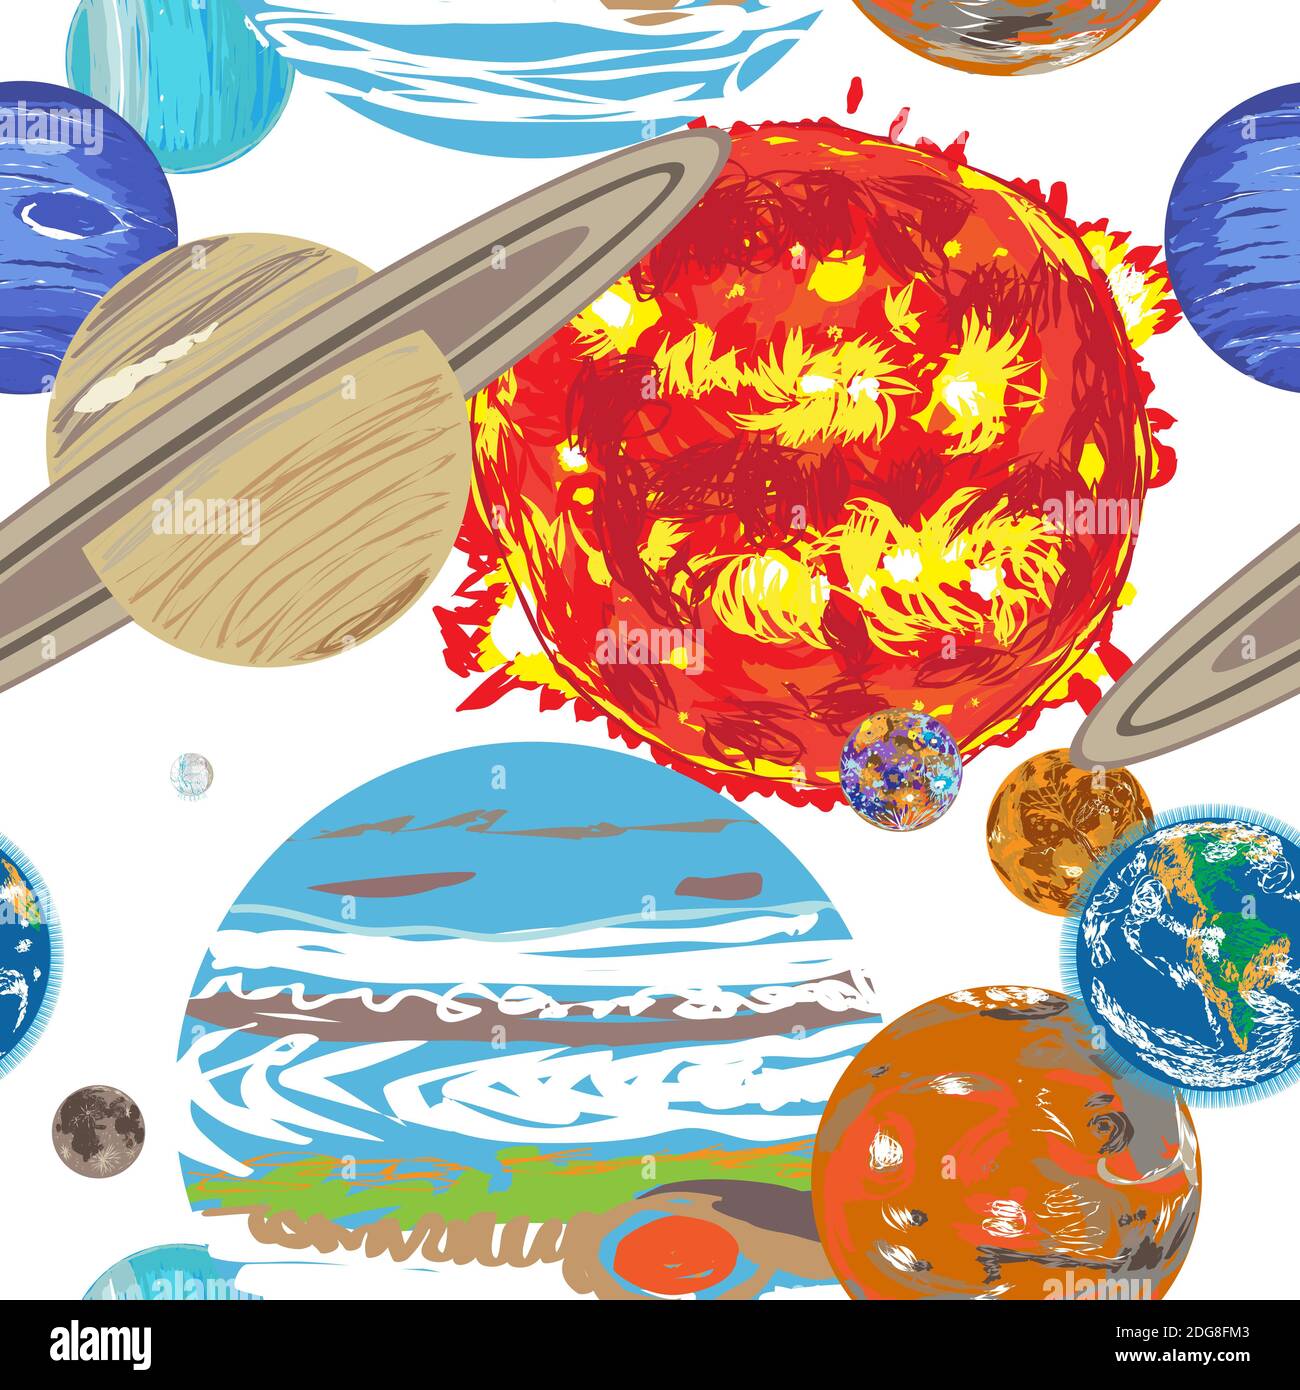 Solar system pattern doodle Stock Photo